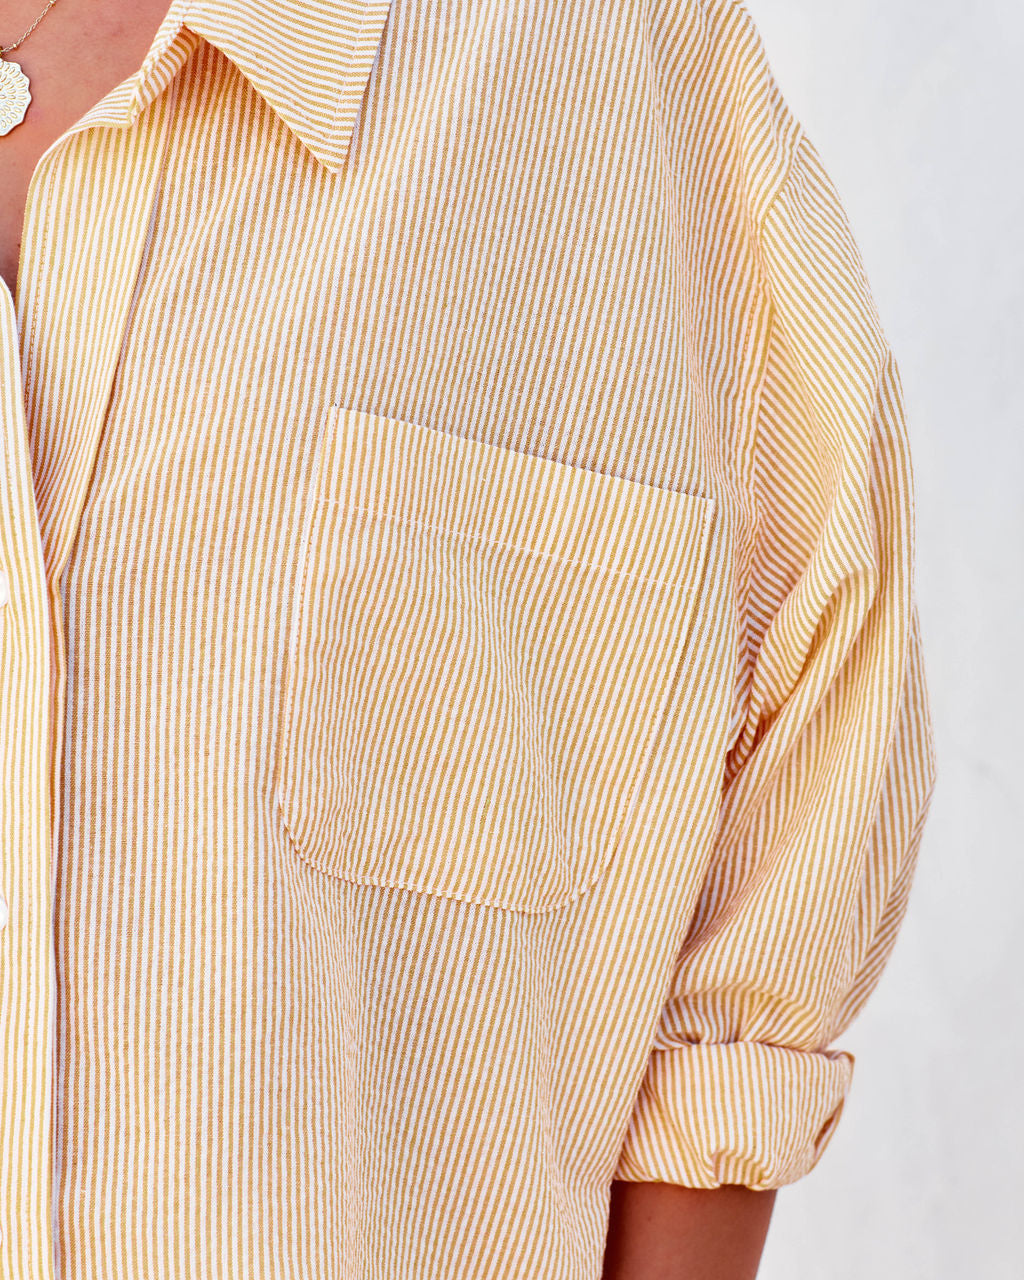 Sebastian Cotton Blend Striped Button Down Top - Yellow Oshnow